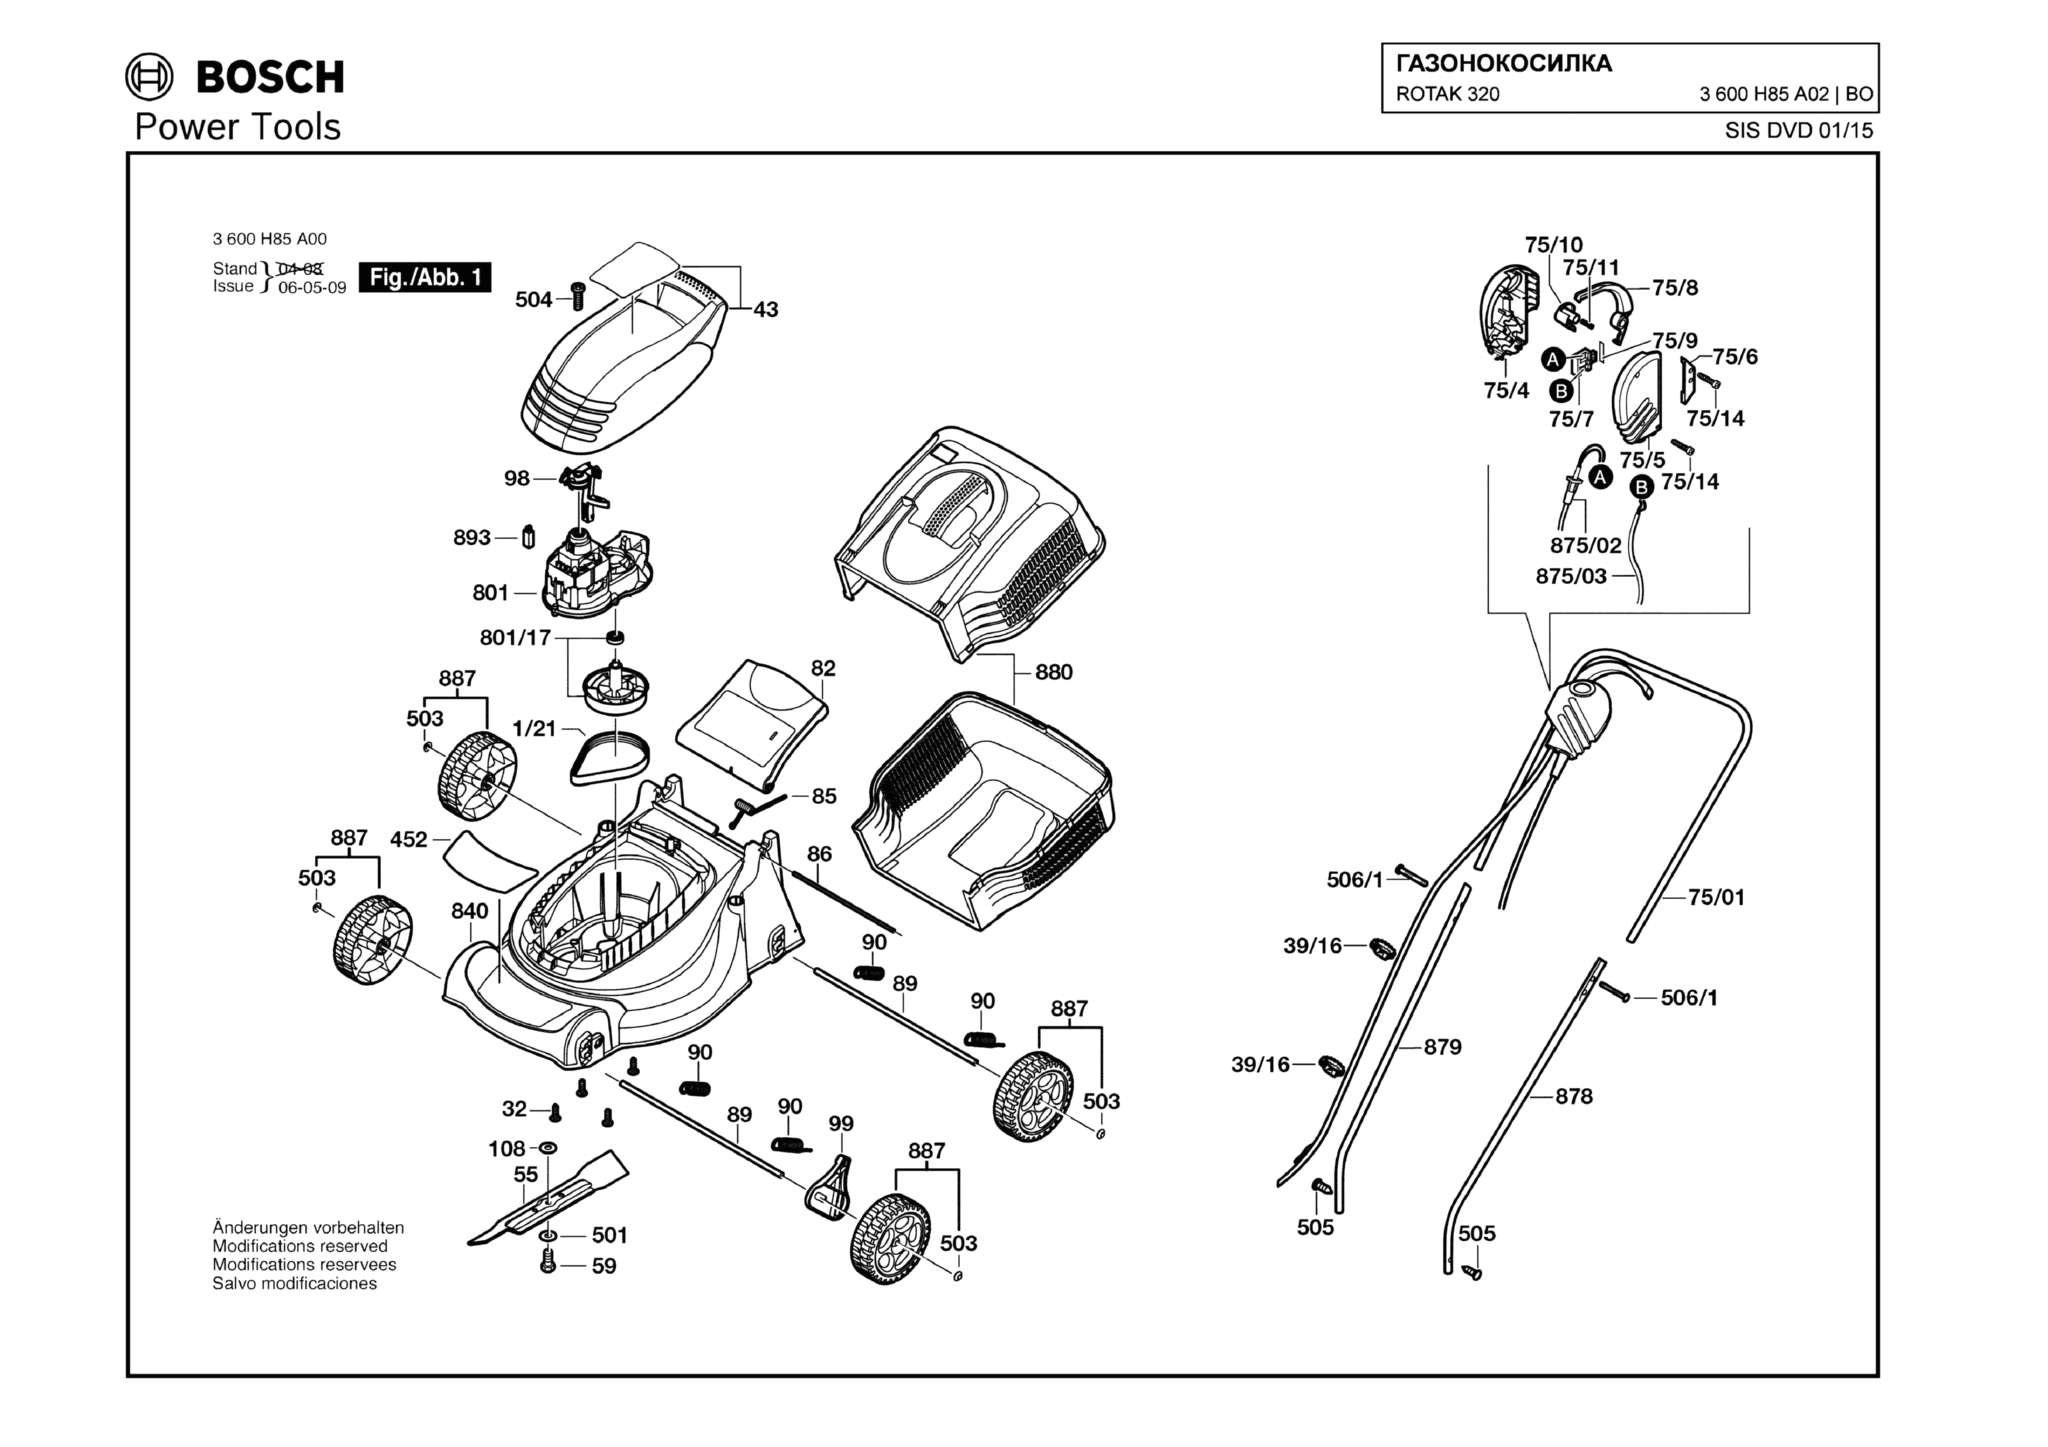 Запчасти, схема и деталировка Bosch ROTAK 320 (ТИП 3600H85A02)